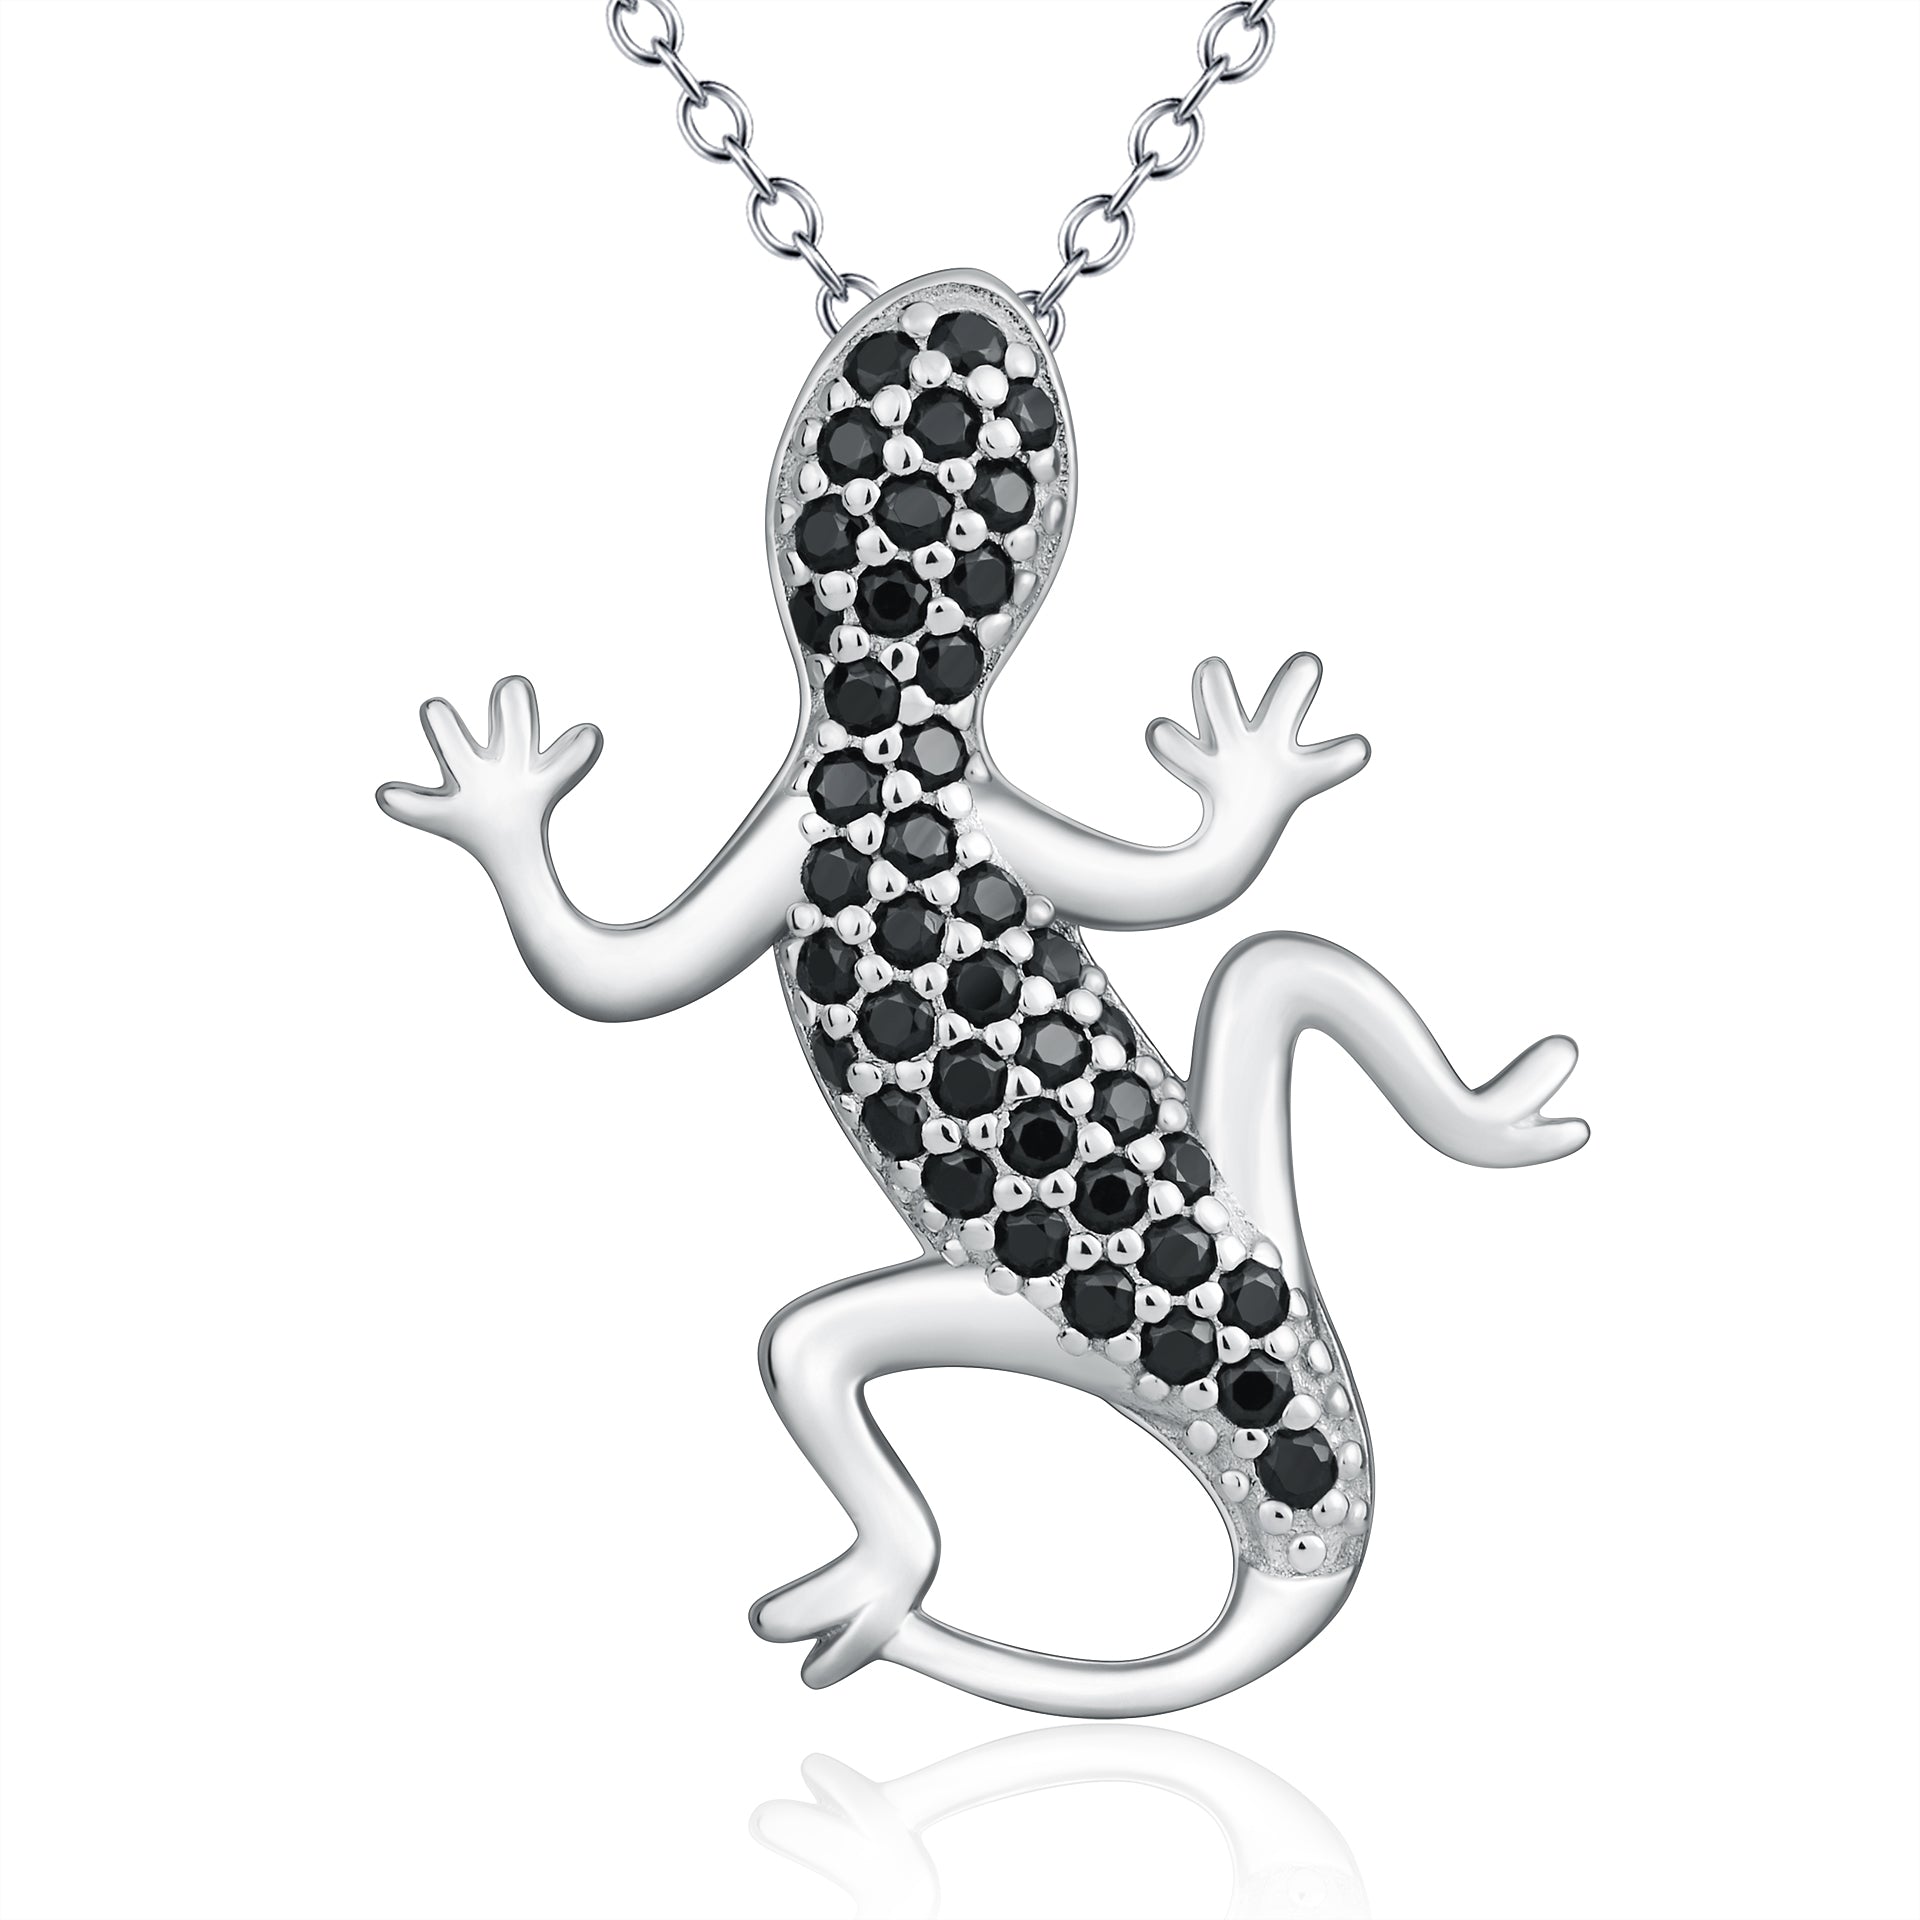 Gecko Shape Design Necklace Pendant Chain Animal Fashion Jewelry